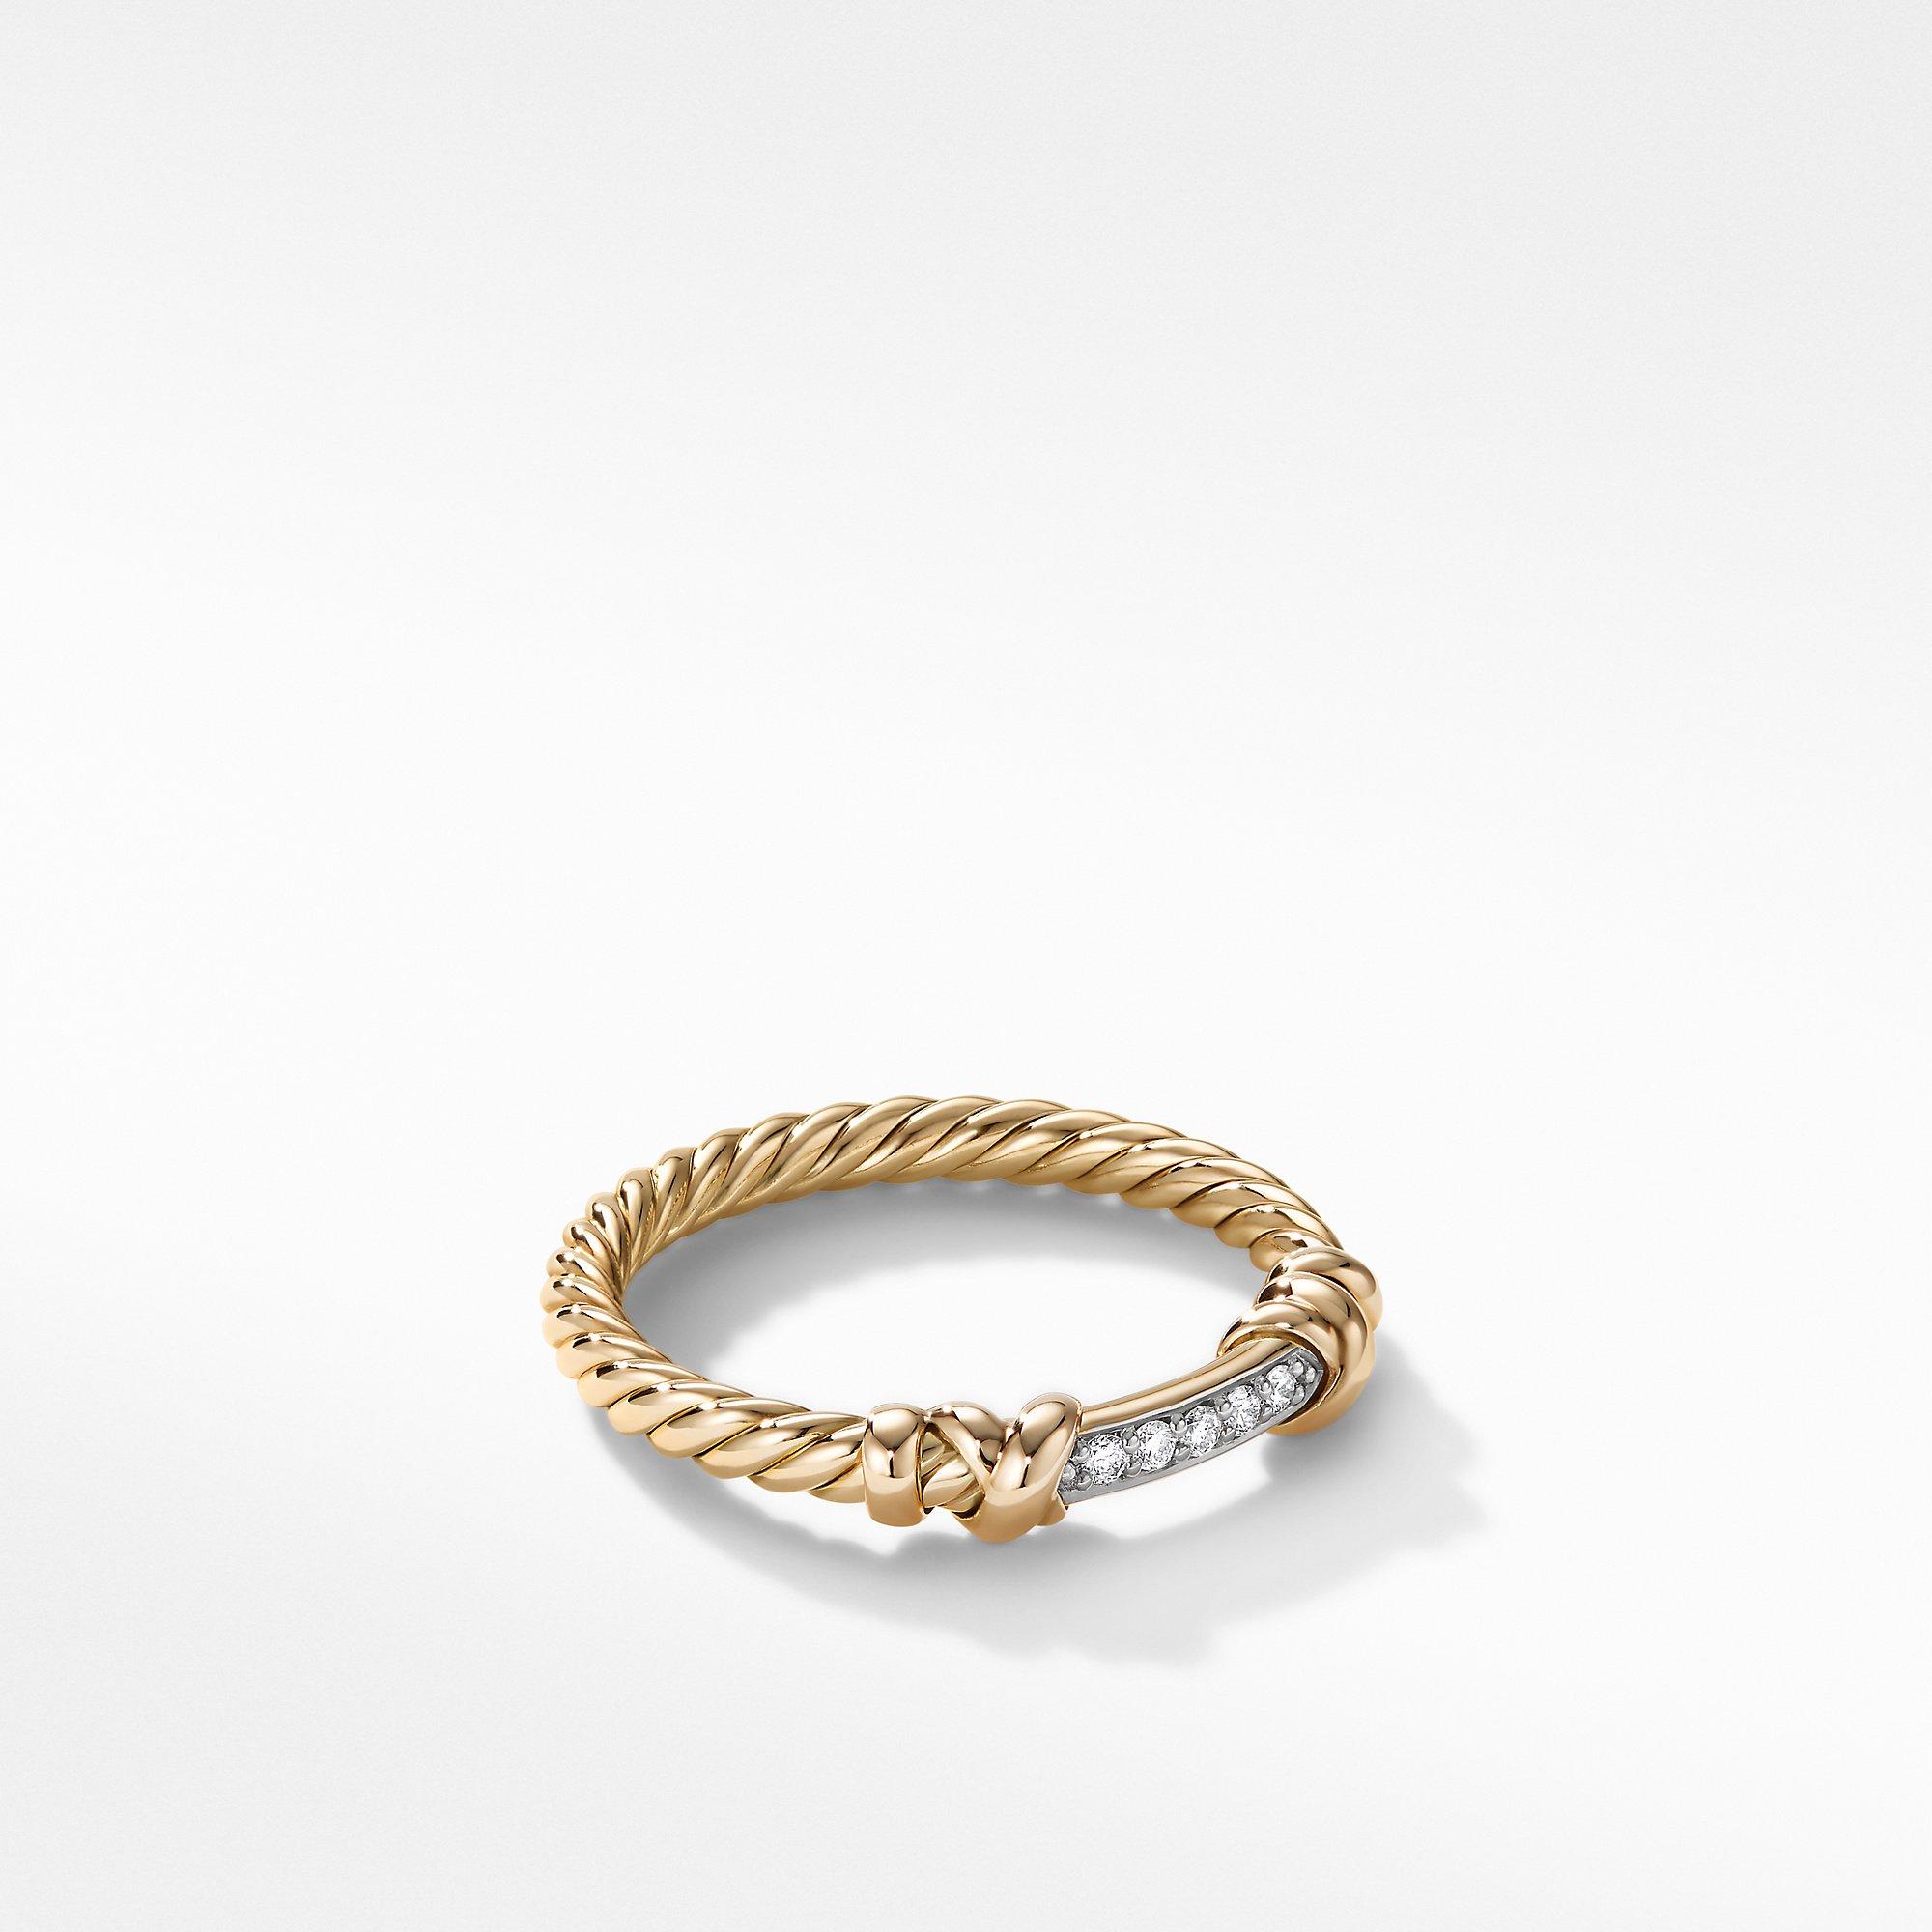 David Yurman Petite Helena Wrap Ring In 18k Yellow Gold With Diamonds, size 7